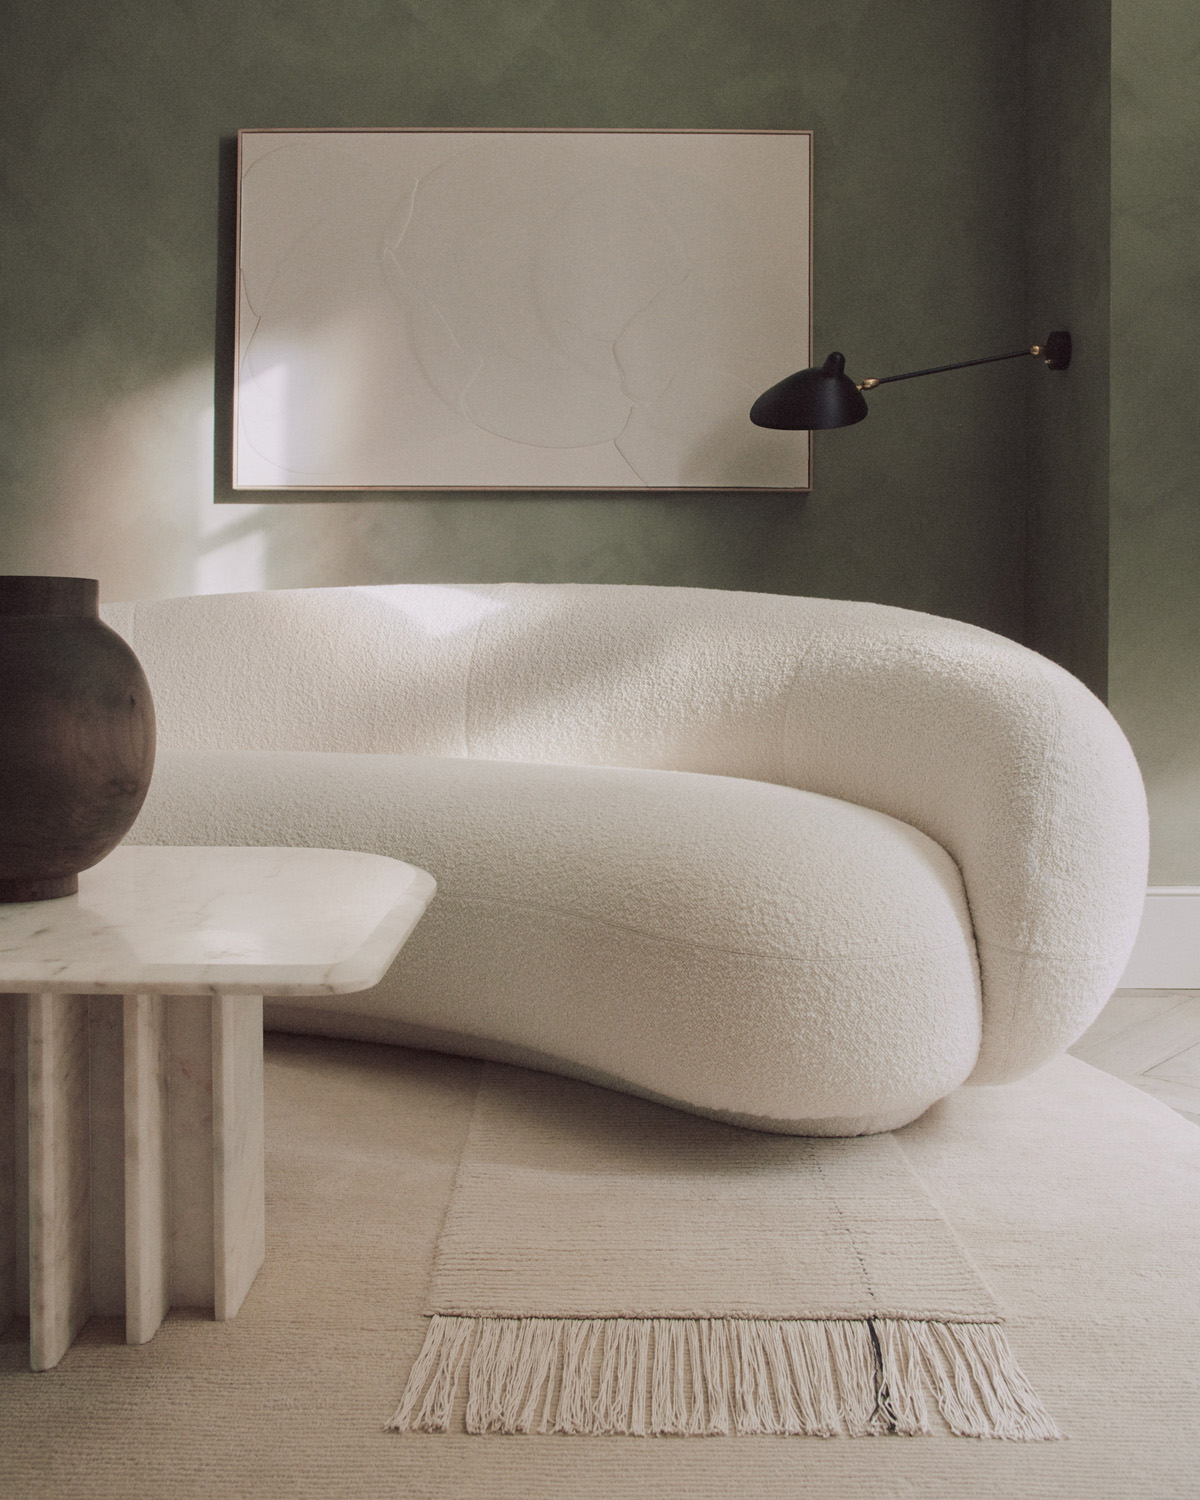 Sofa at Bisham Gardens by House of Grey- luxury contemporary interior design studio in London